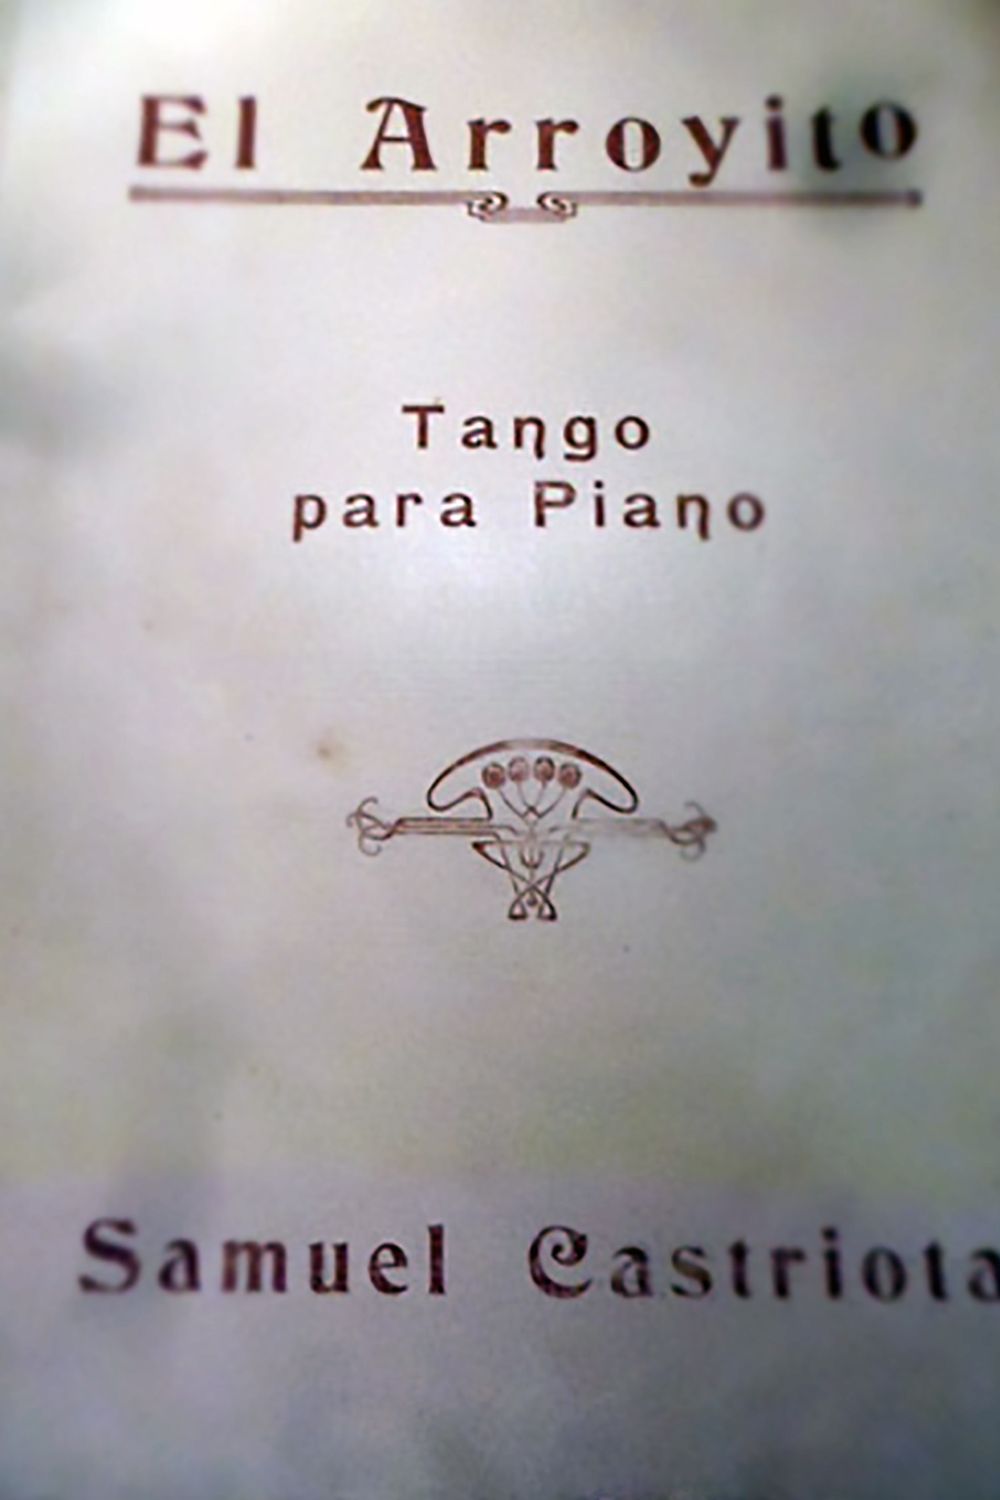 "El arroyito", Argentine Tango music sheet cover.